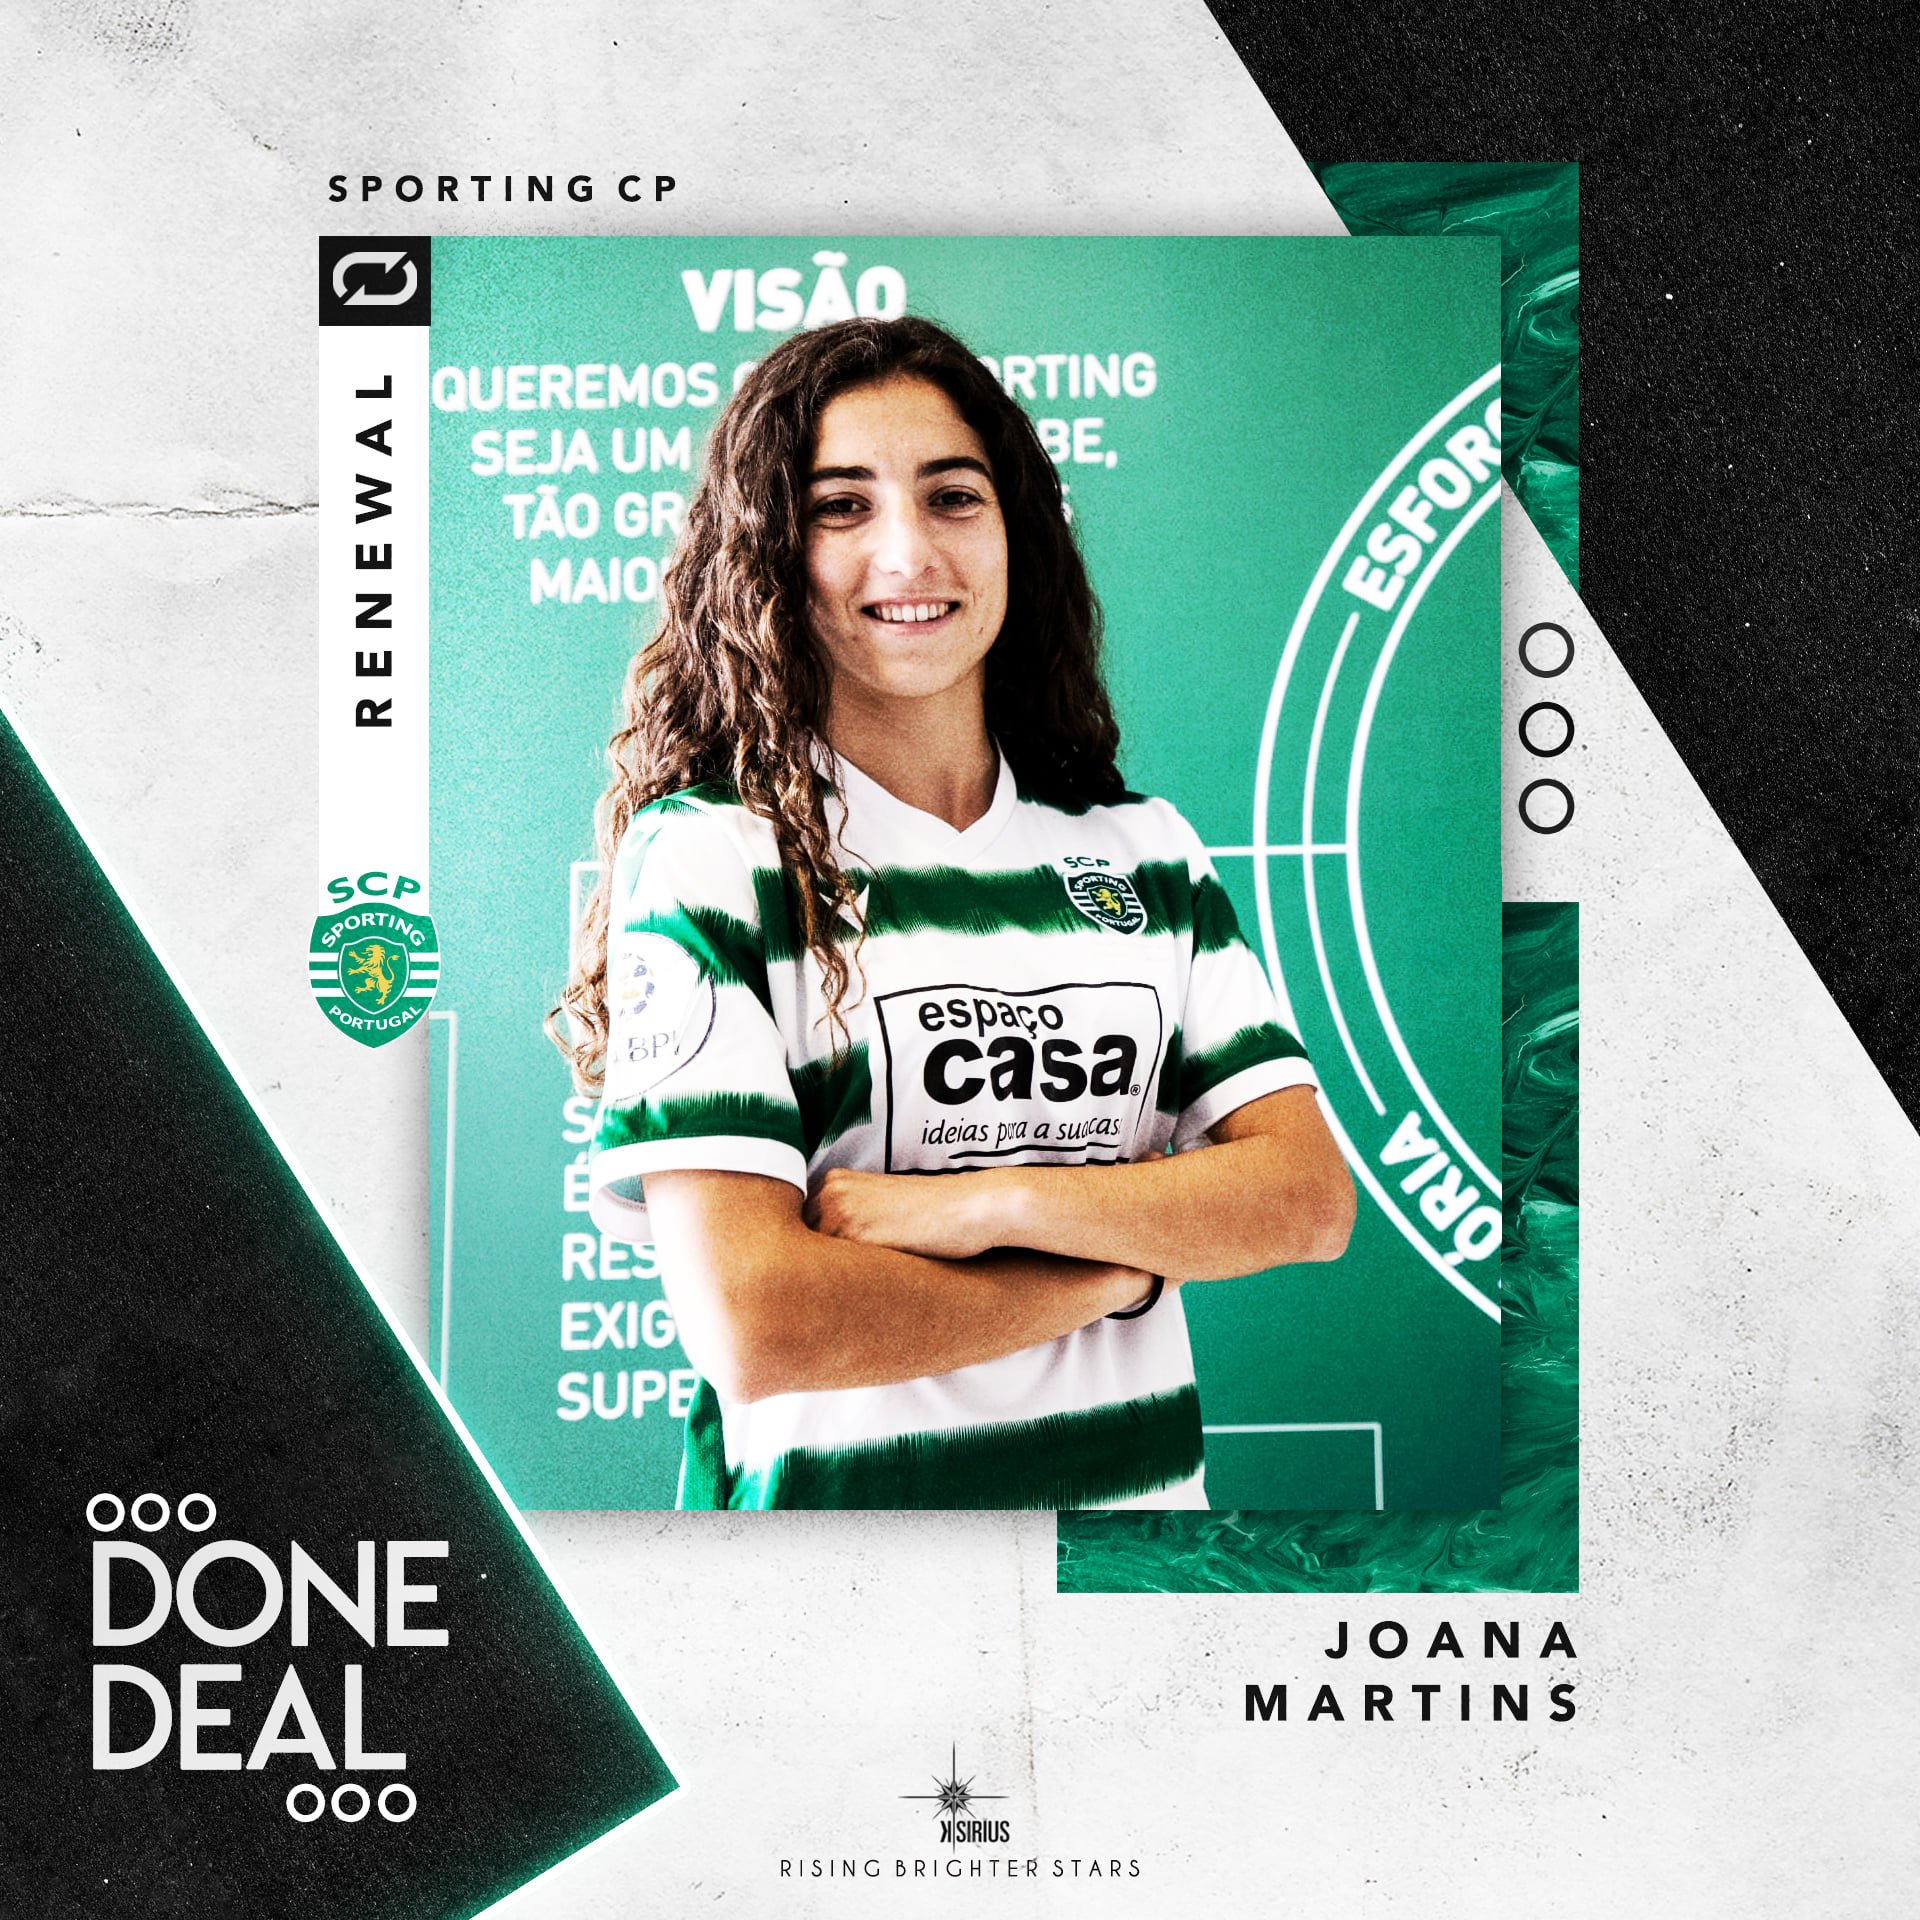 Renewal: Joana Martins with Sporting C.P.